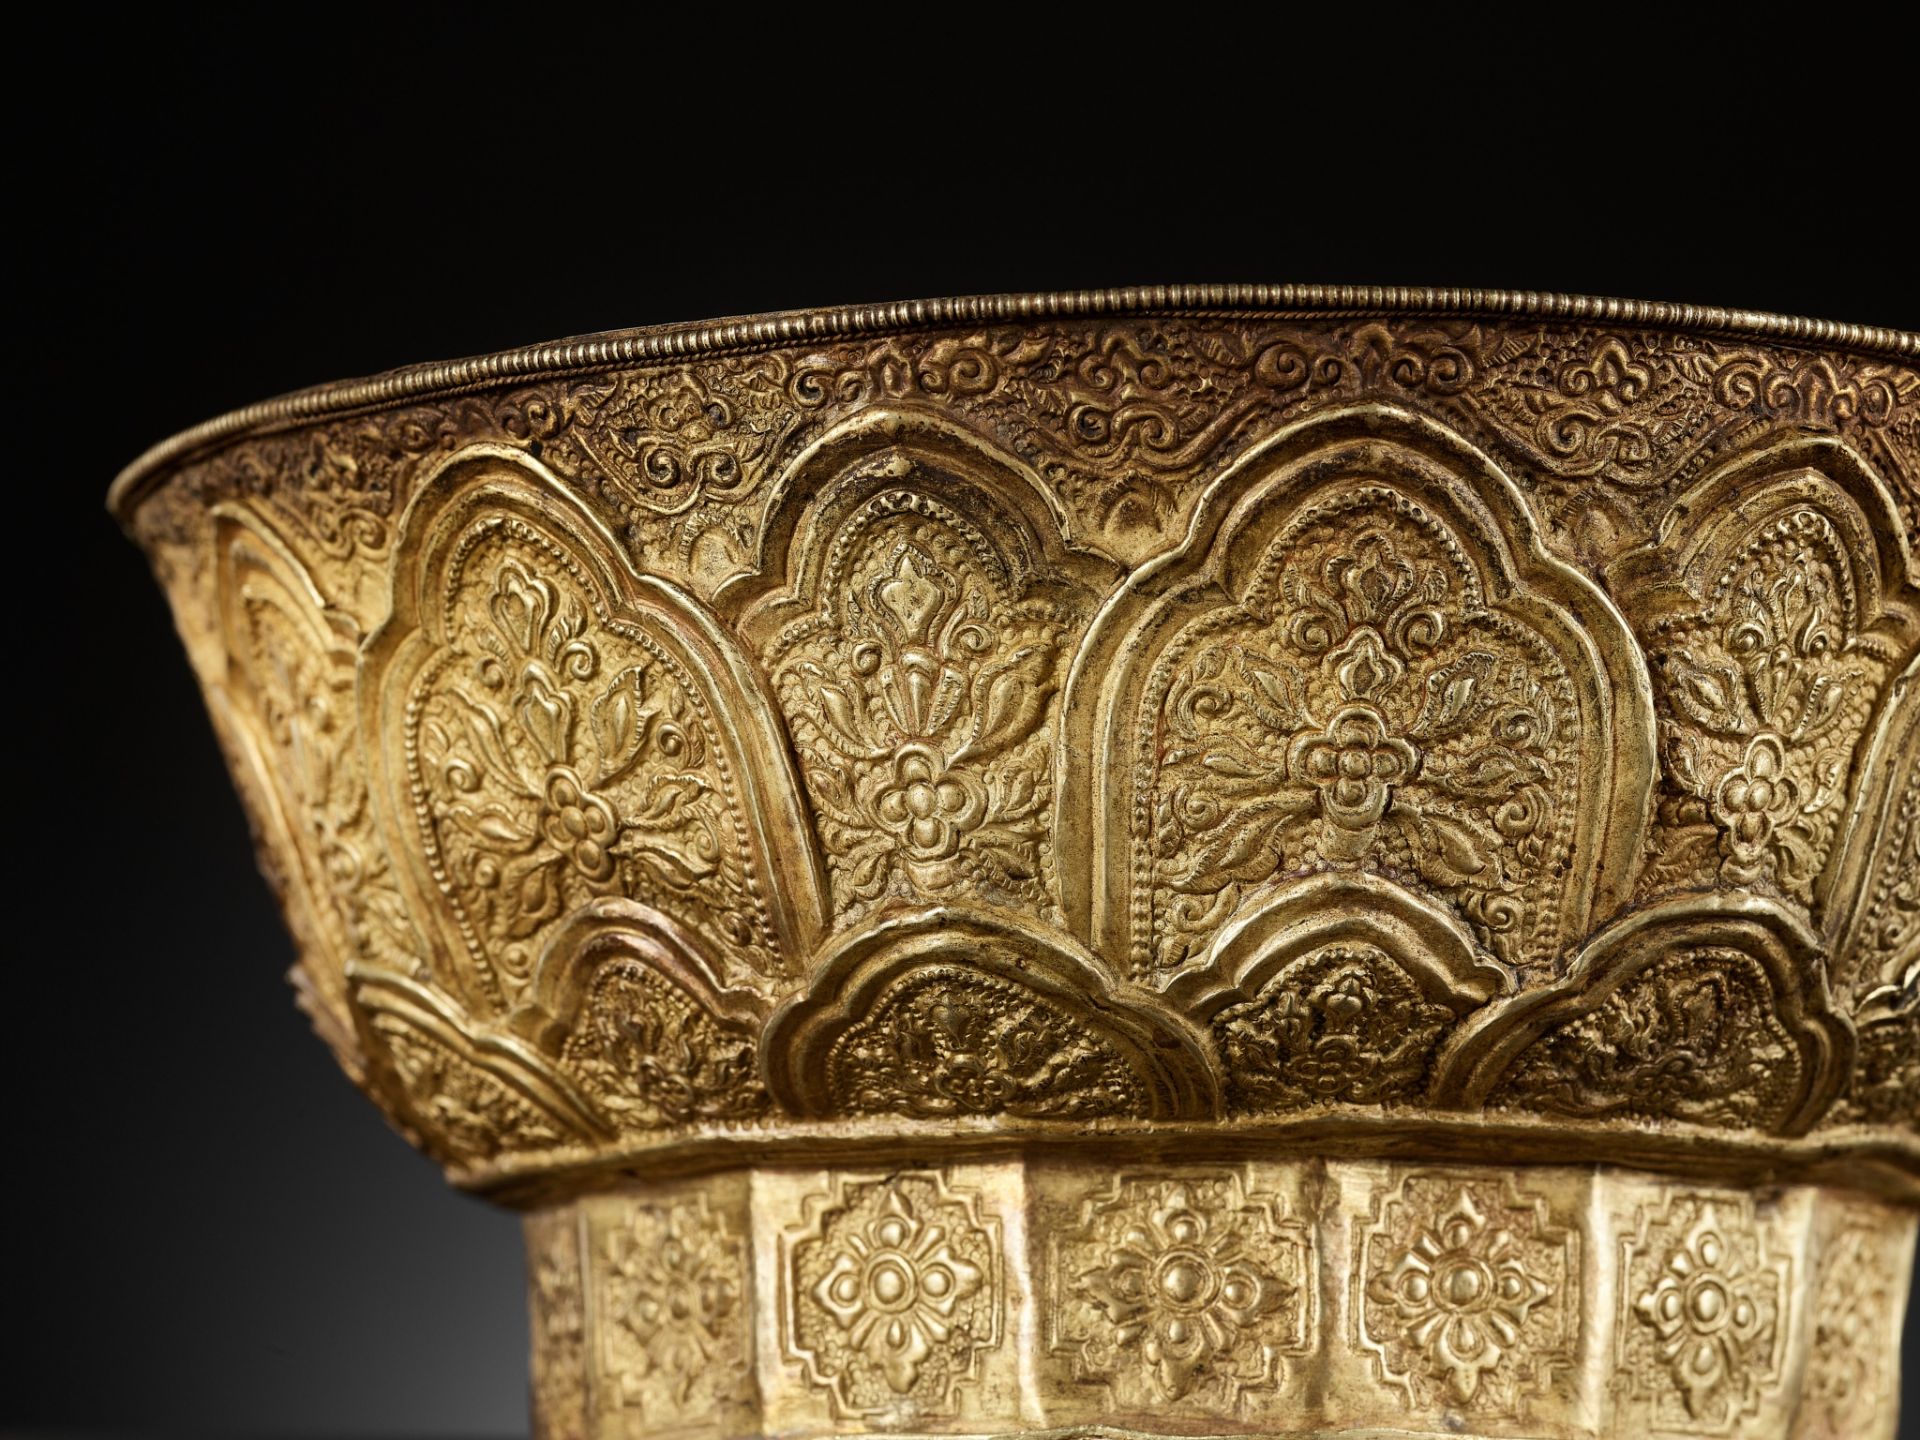 A SILVER-INLAID GOLD REPOUSSÉ BOWL DEPICTING GARUDA, VIETNAM,FORMER KINGDOMS OF CHAMPA,CIRCA 10TH C. - Image 10 of 18